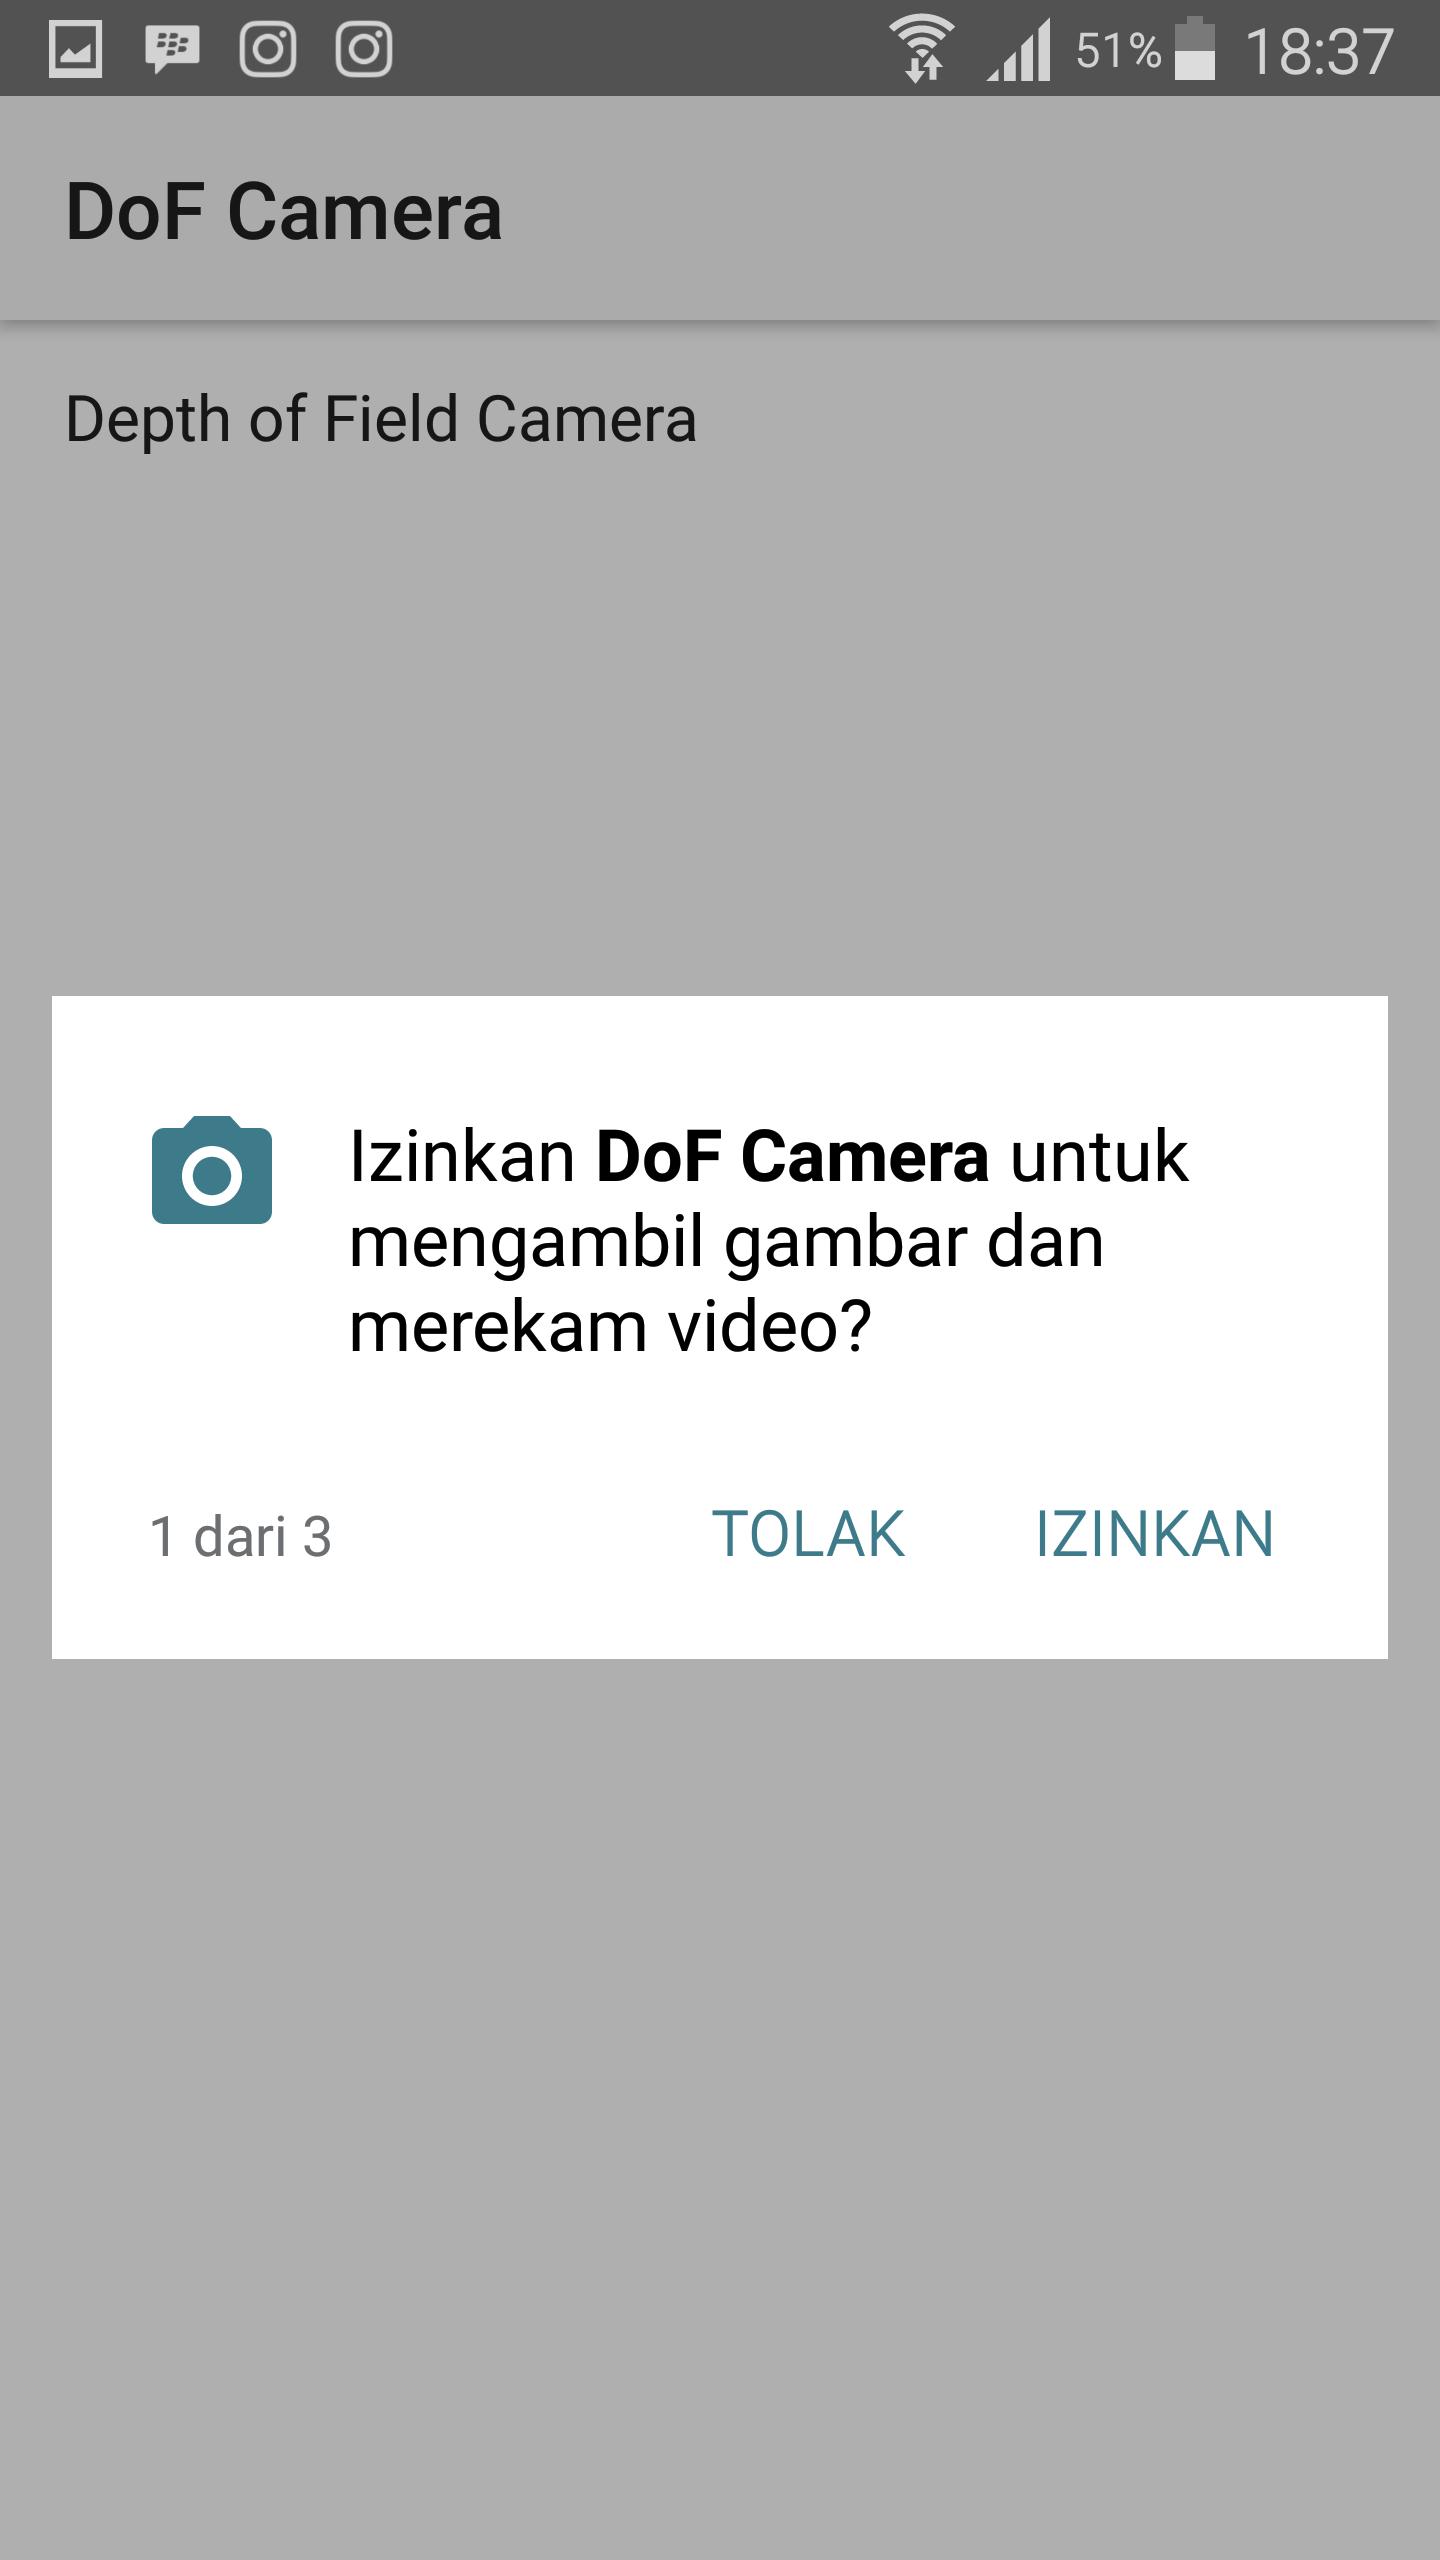 DoF Camera